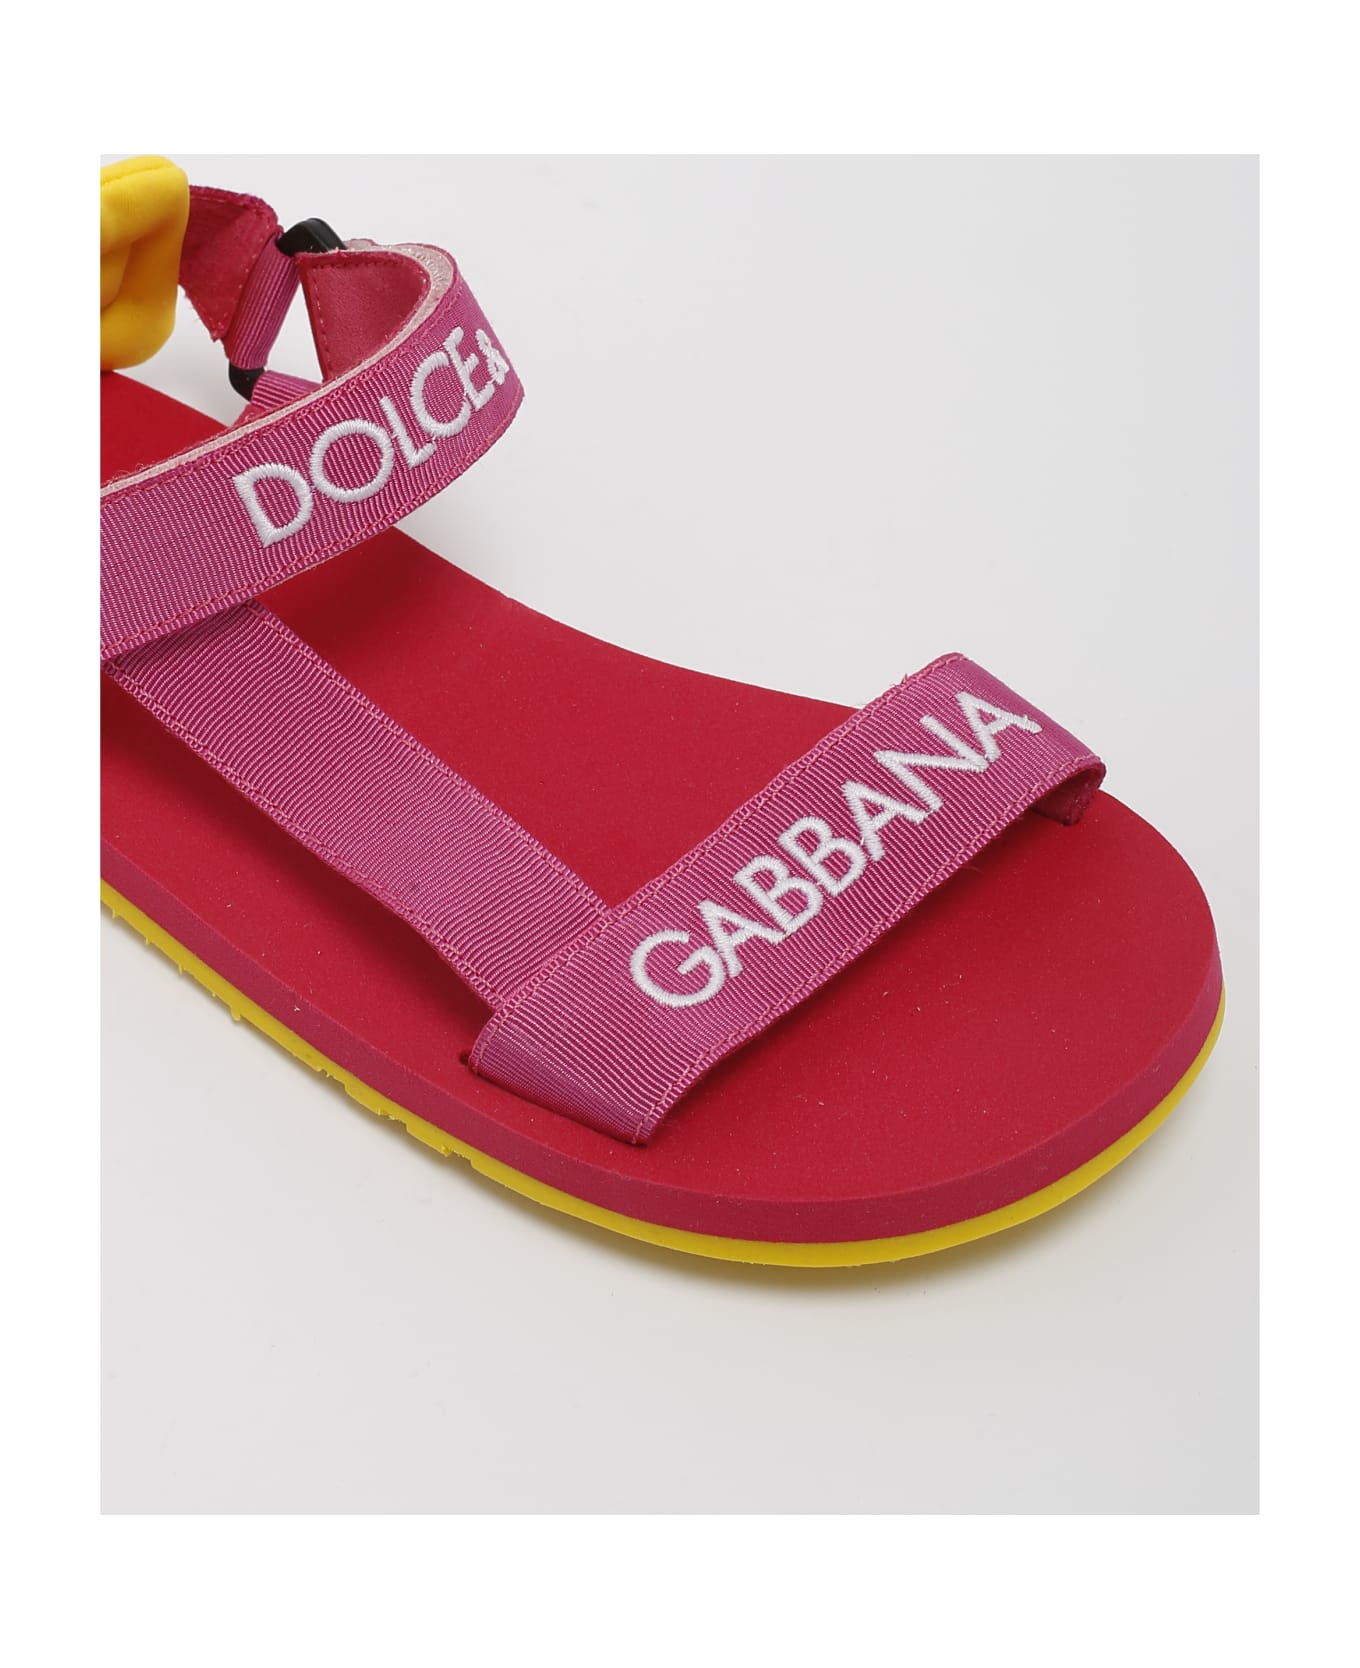 Dolce & Gabbana Sandals Sandal - FUCSIA-BIANCO